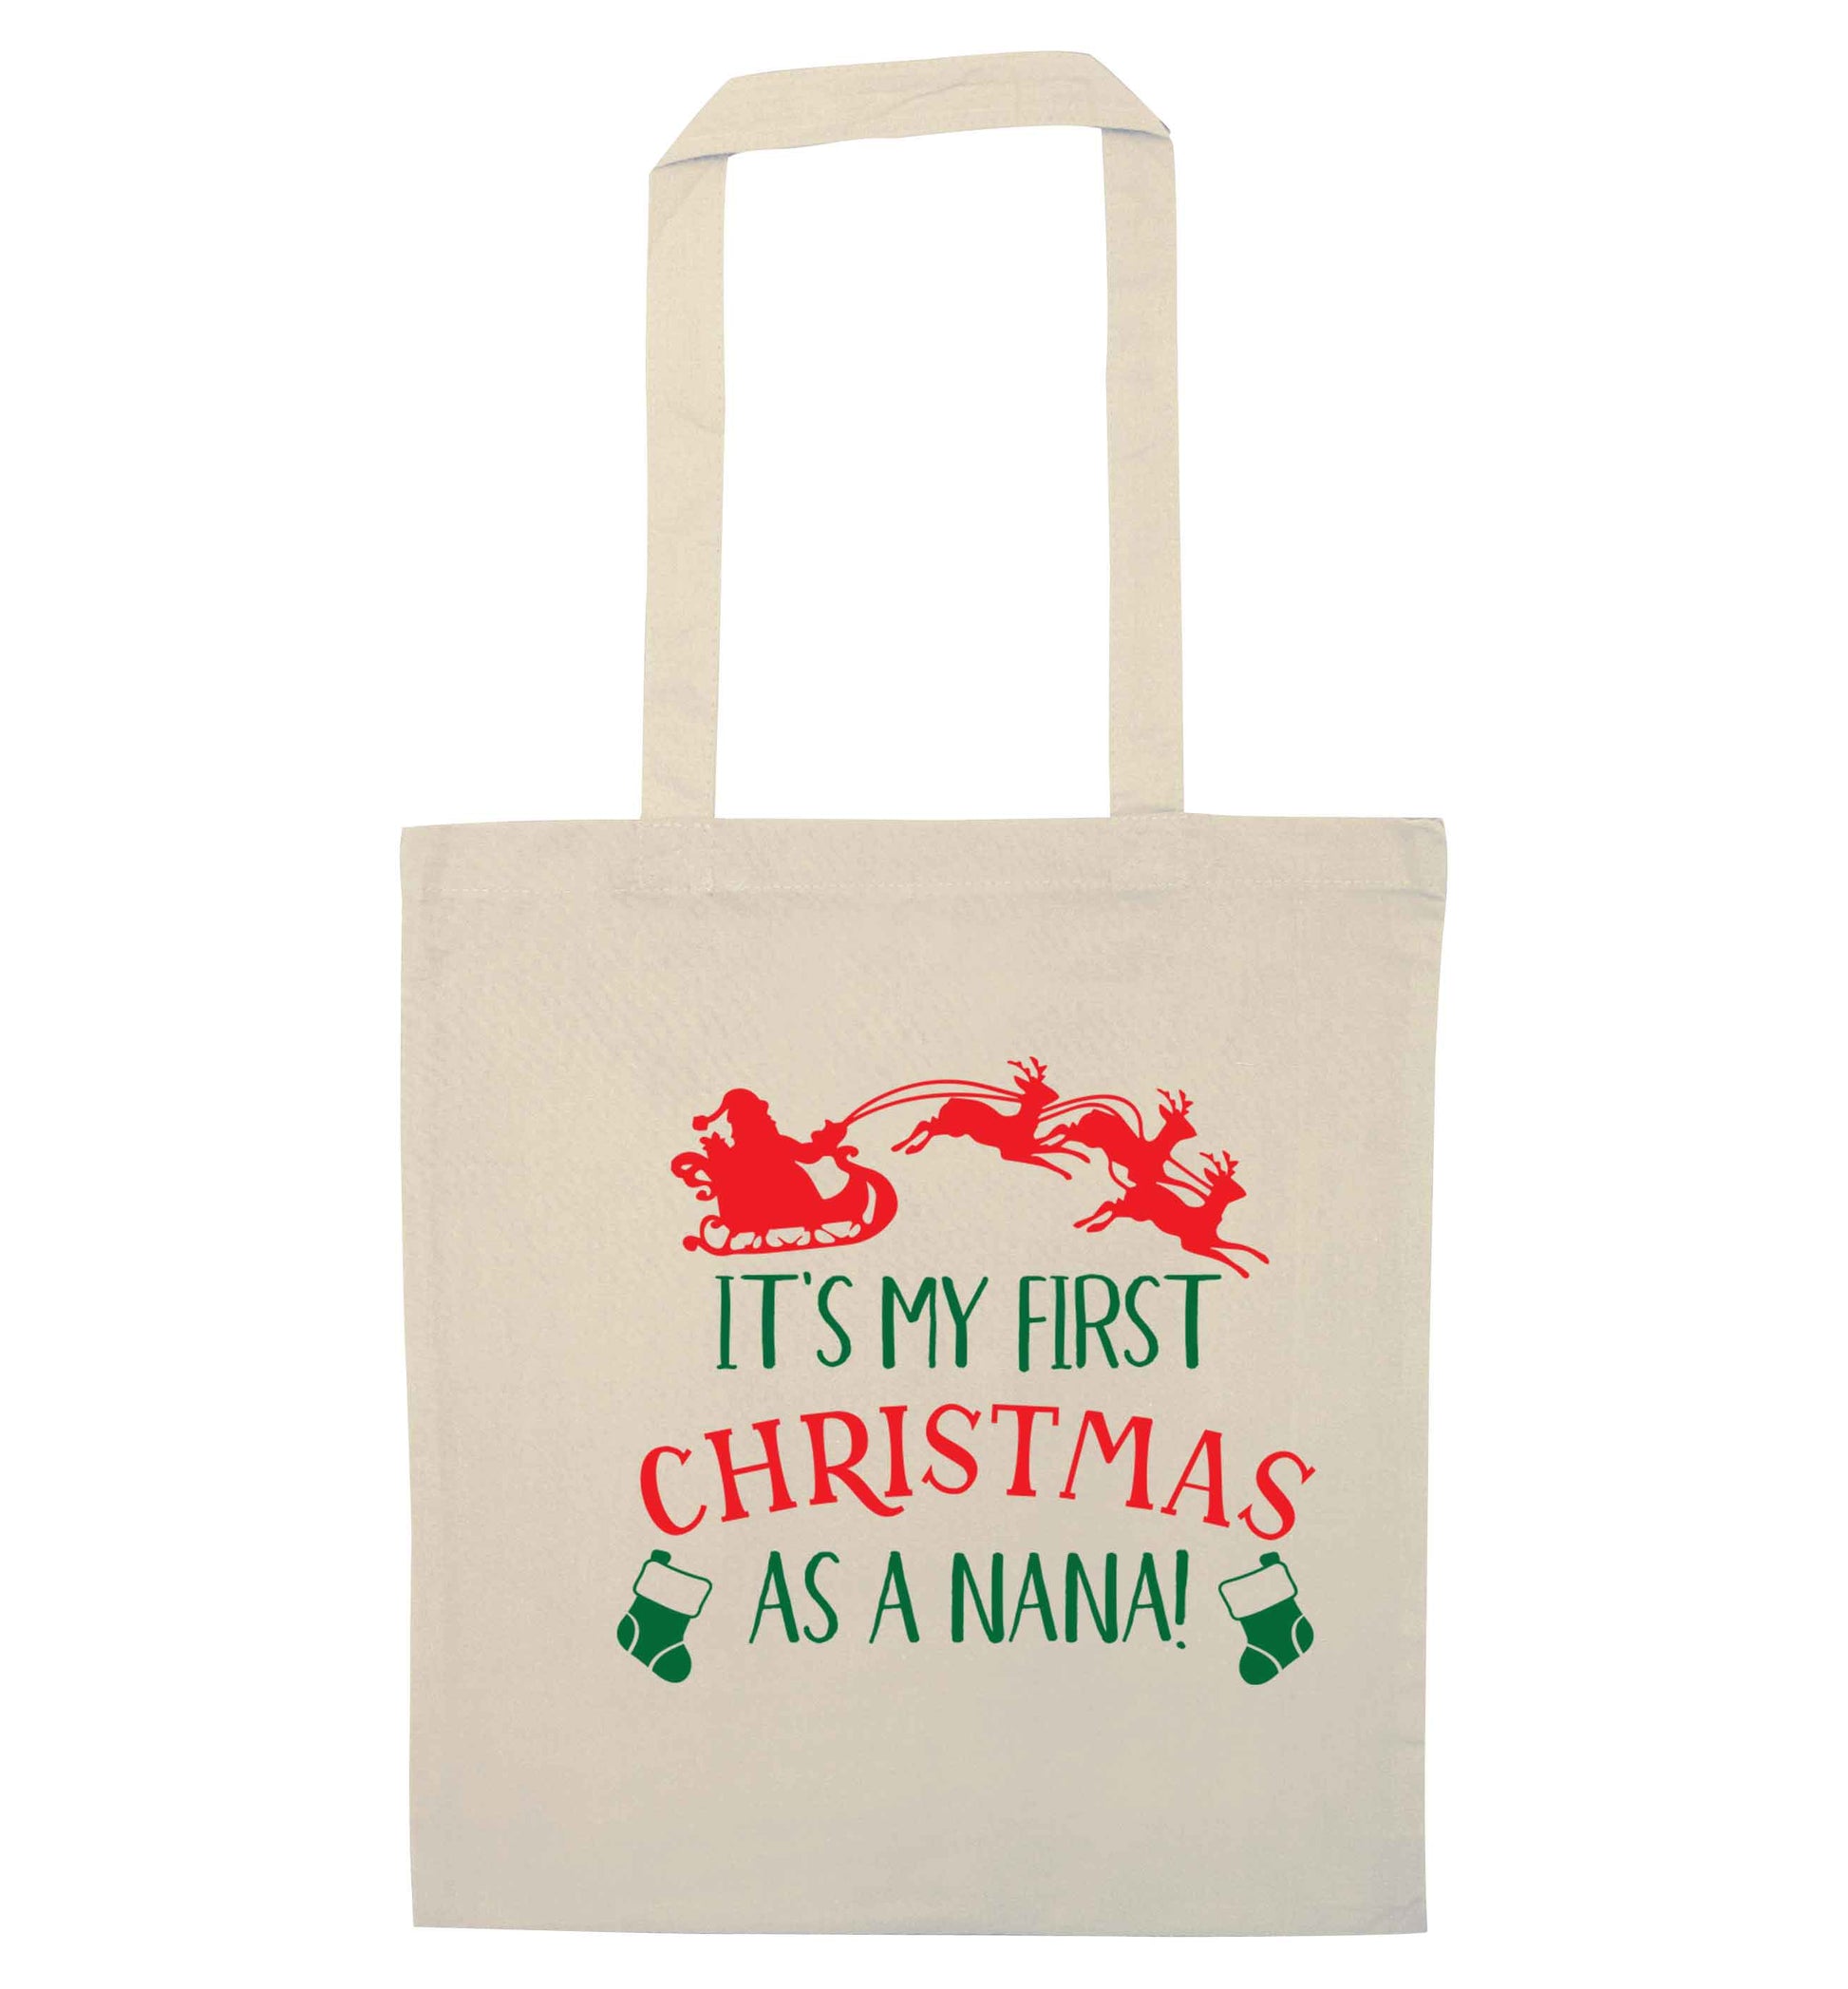 It's my first Christmas as a nana natural tote bag